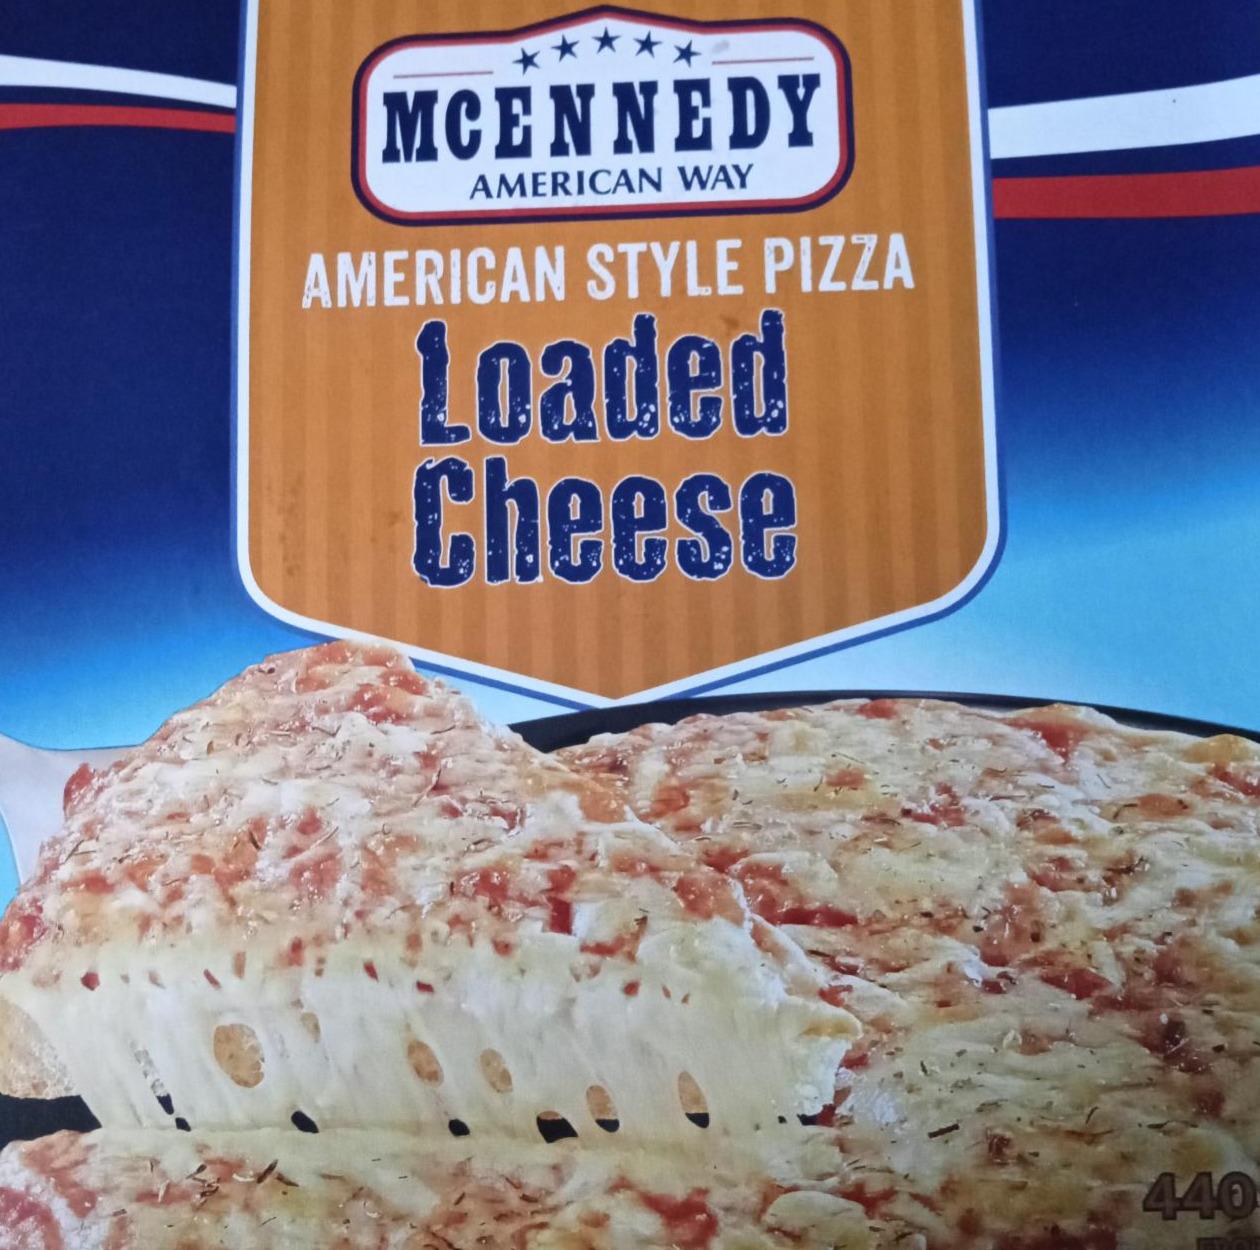 Zdjęcia - American style pizza loaded cheese Mcennedy